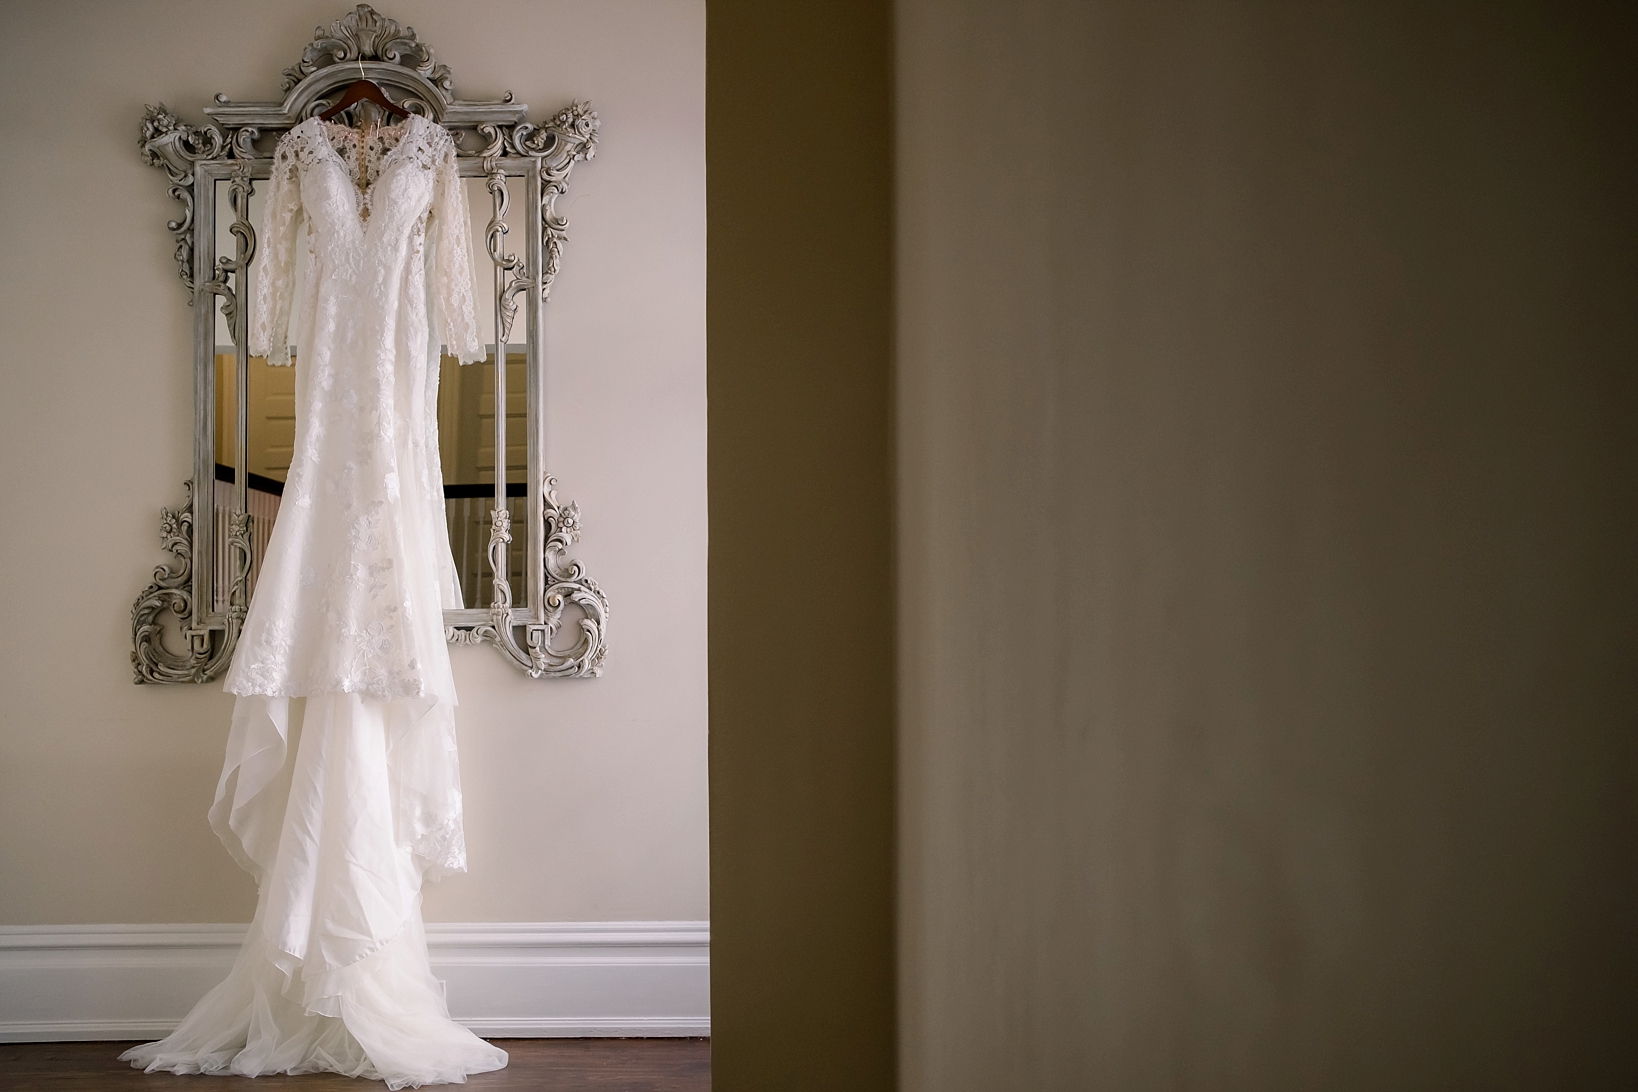 Beautiful lace wedding dress hanging on an ornate mirror in tampa Florida